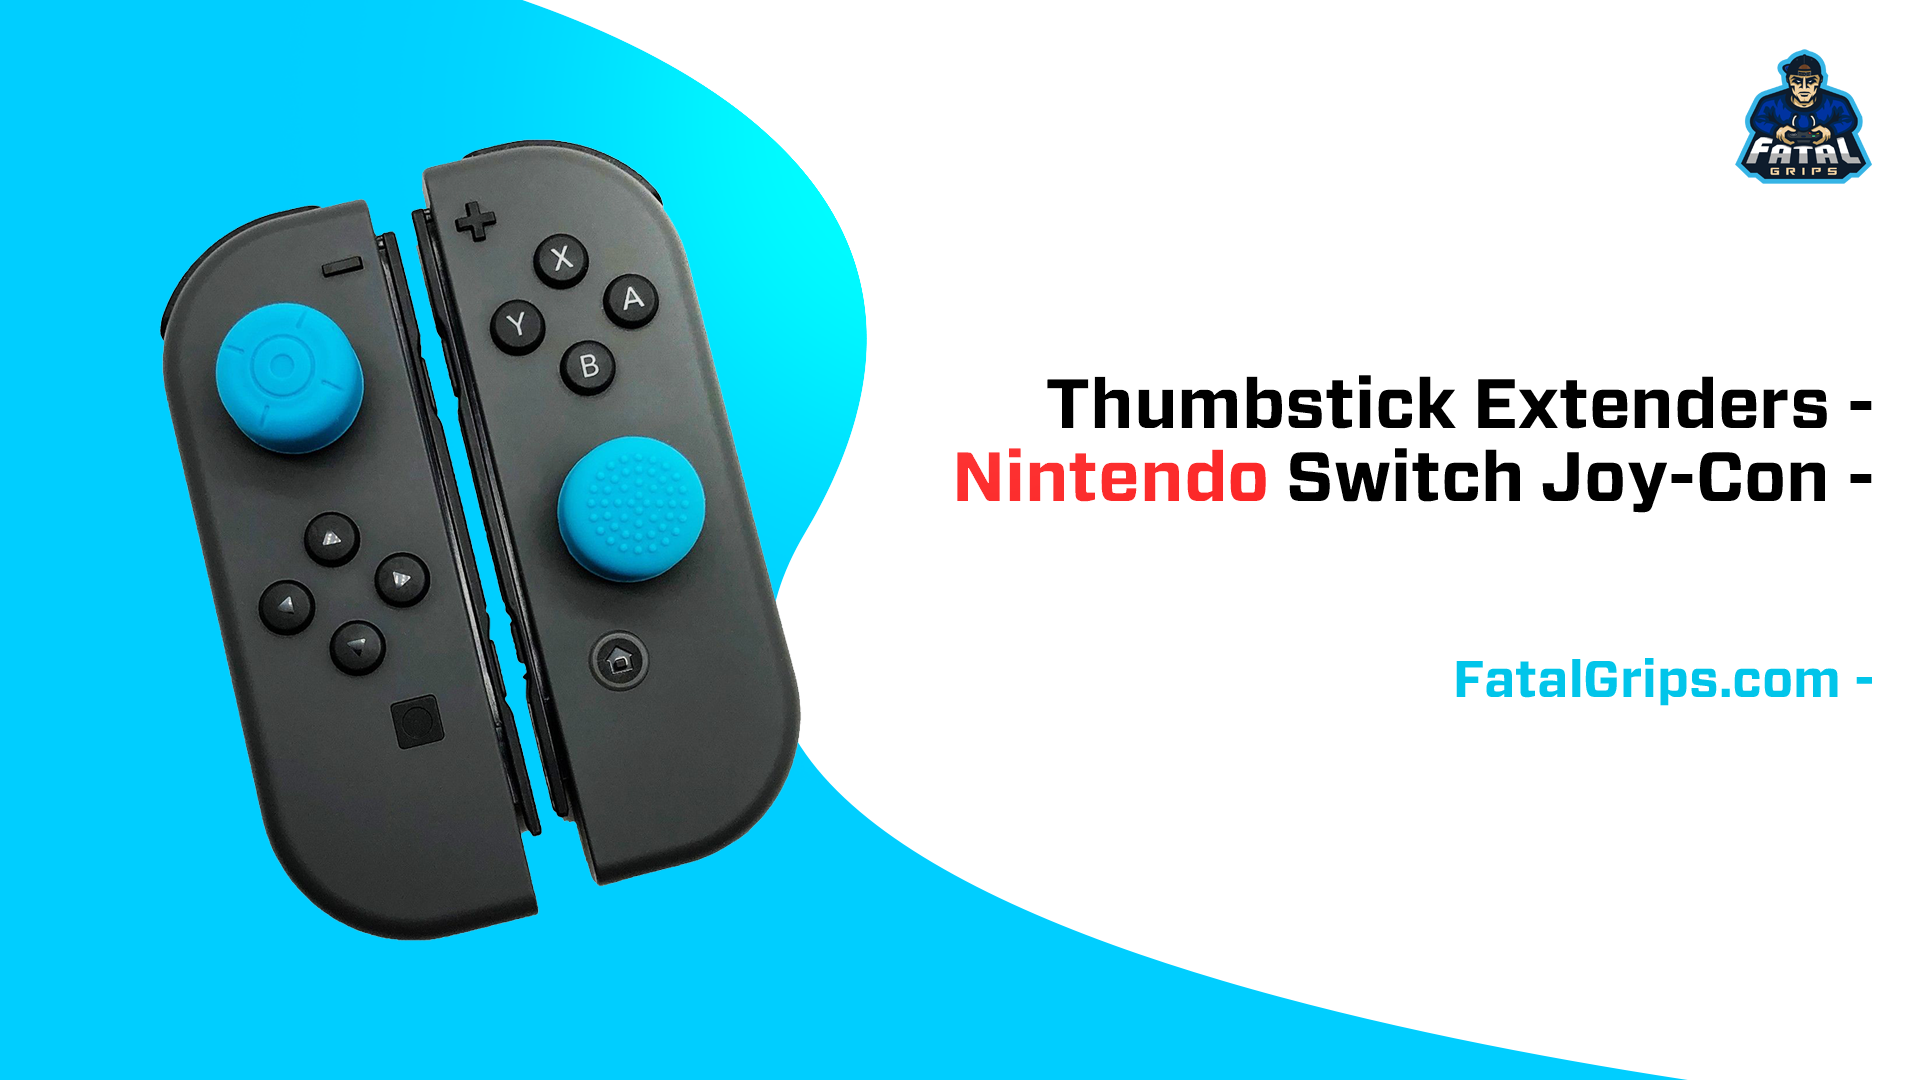 Nintendo Switch Thumbstick Extenders - Fatal Grips